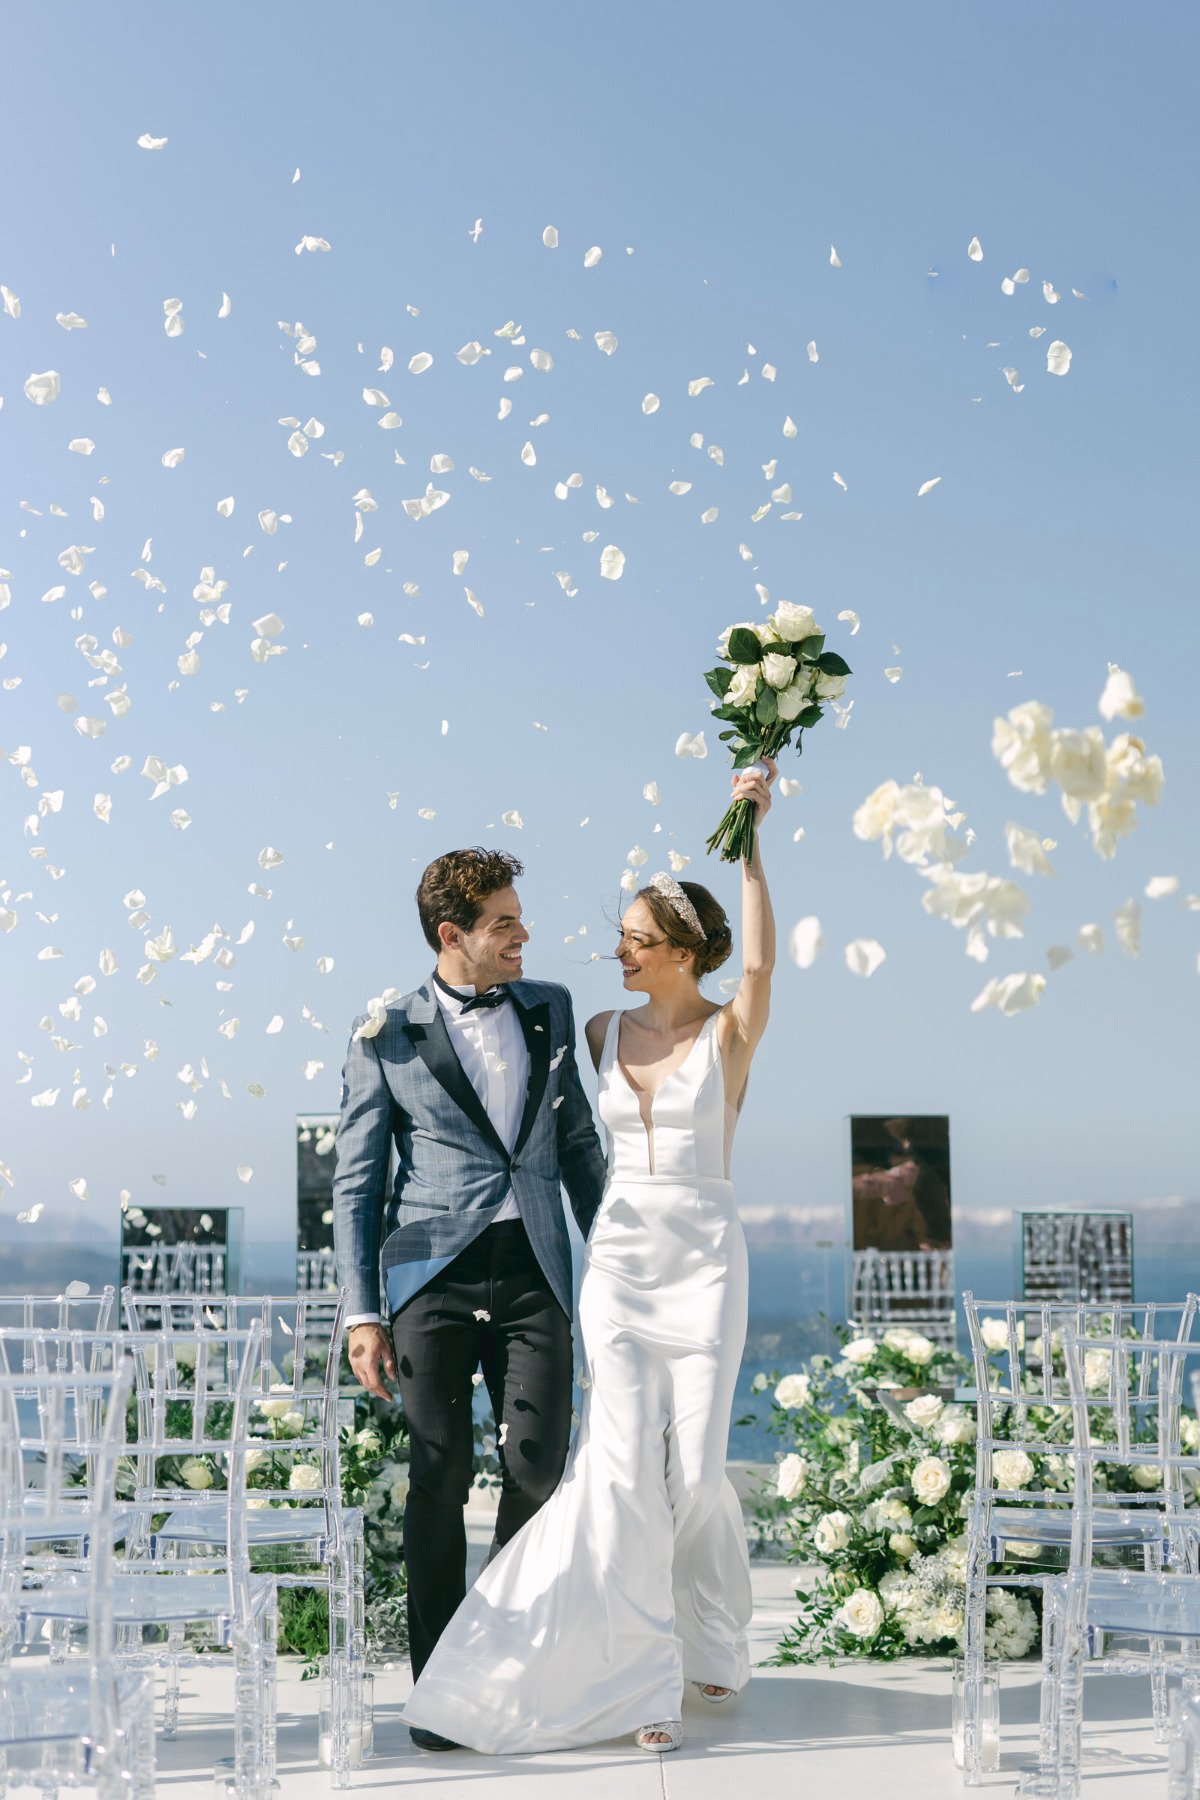 Flower petal exit at Greek wedding